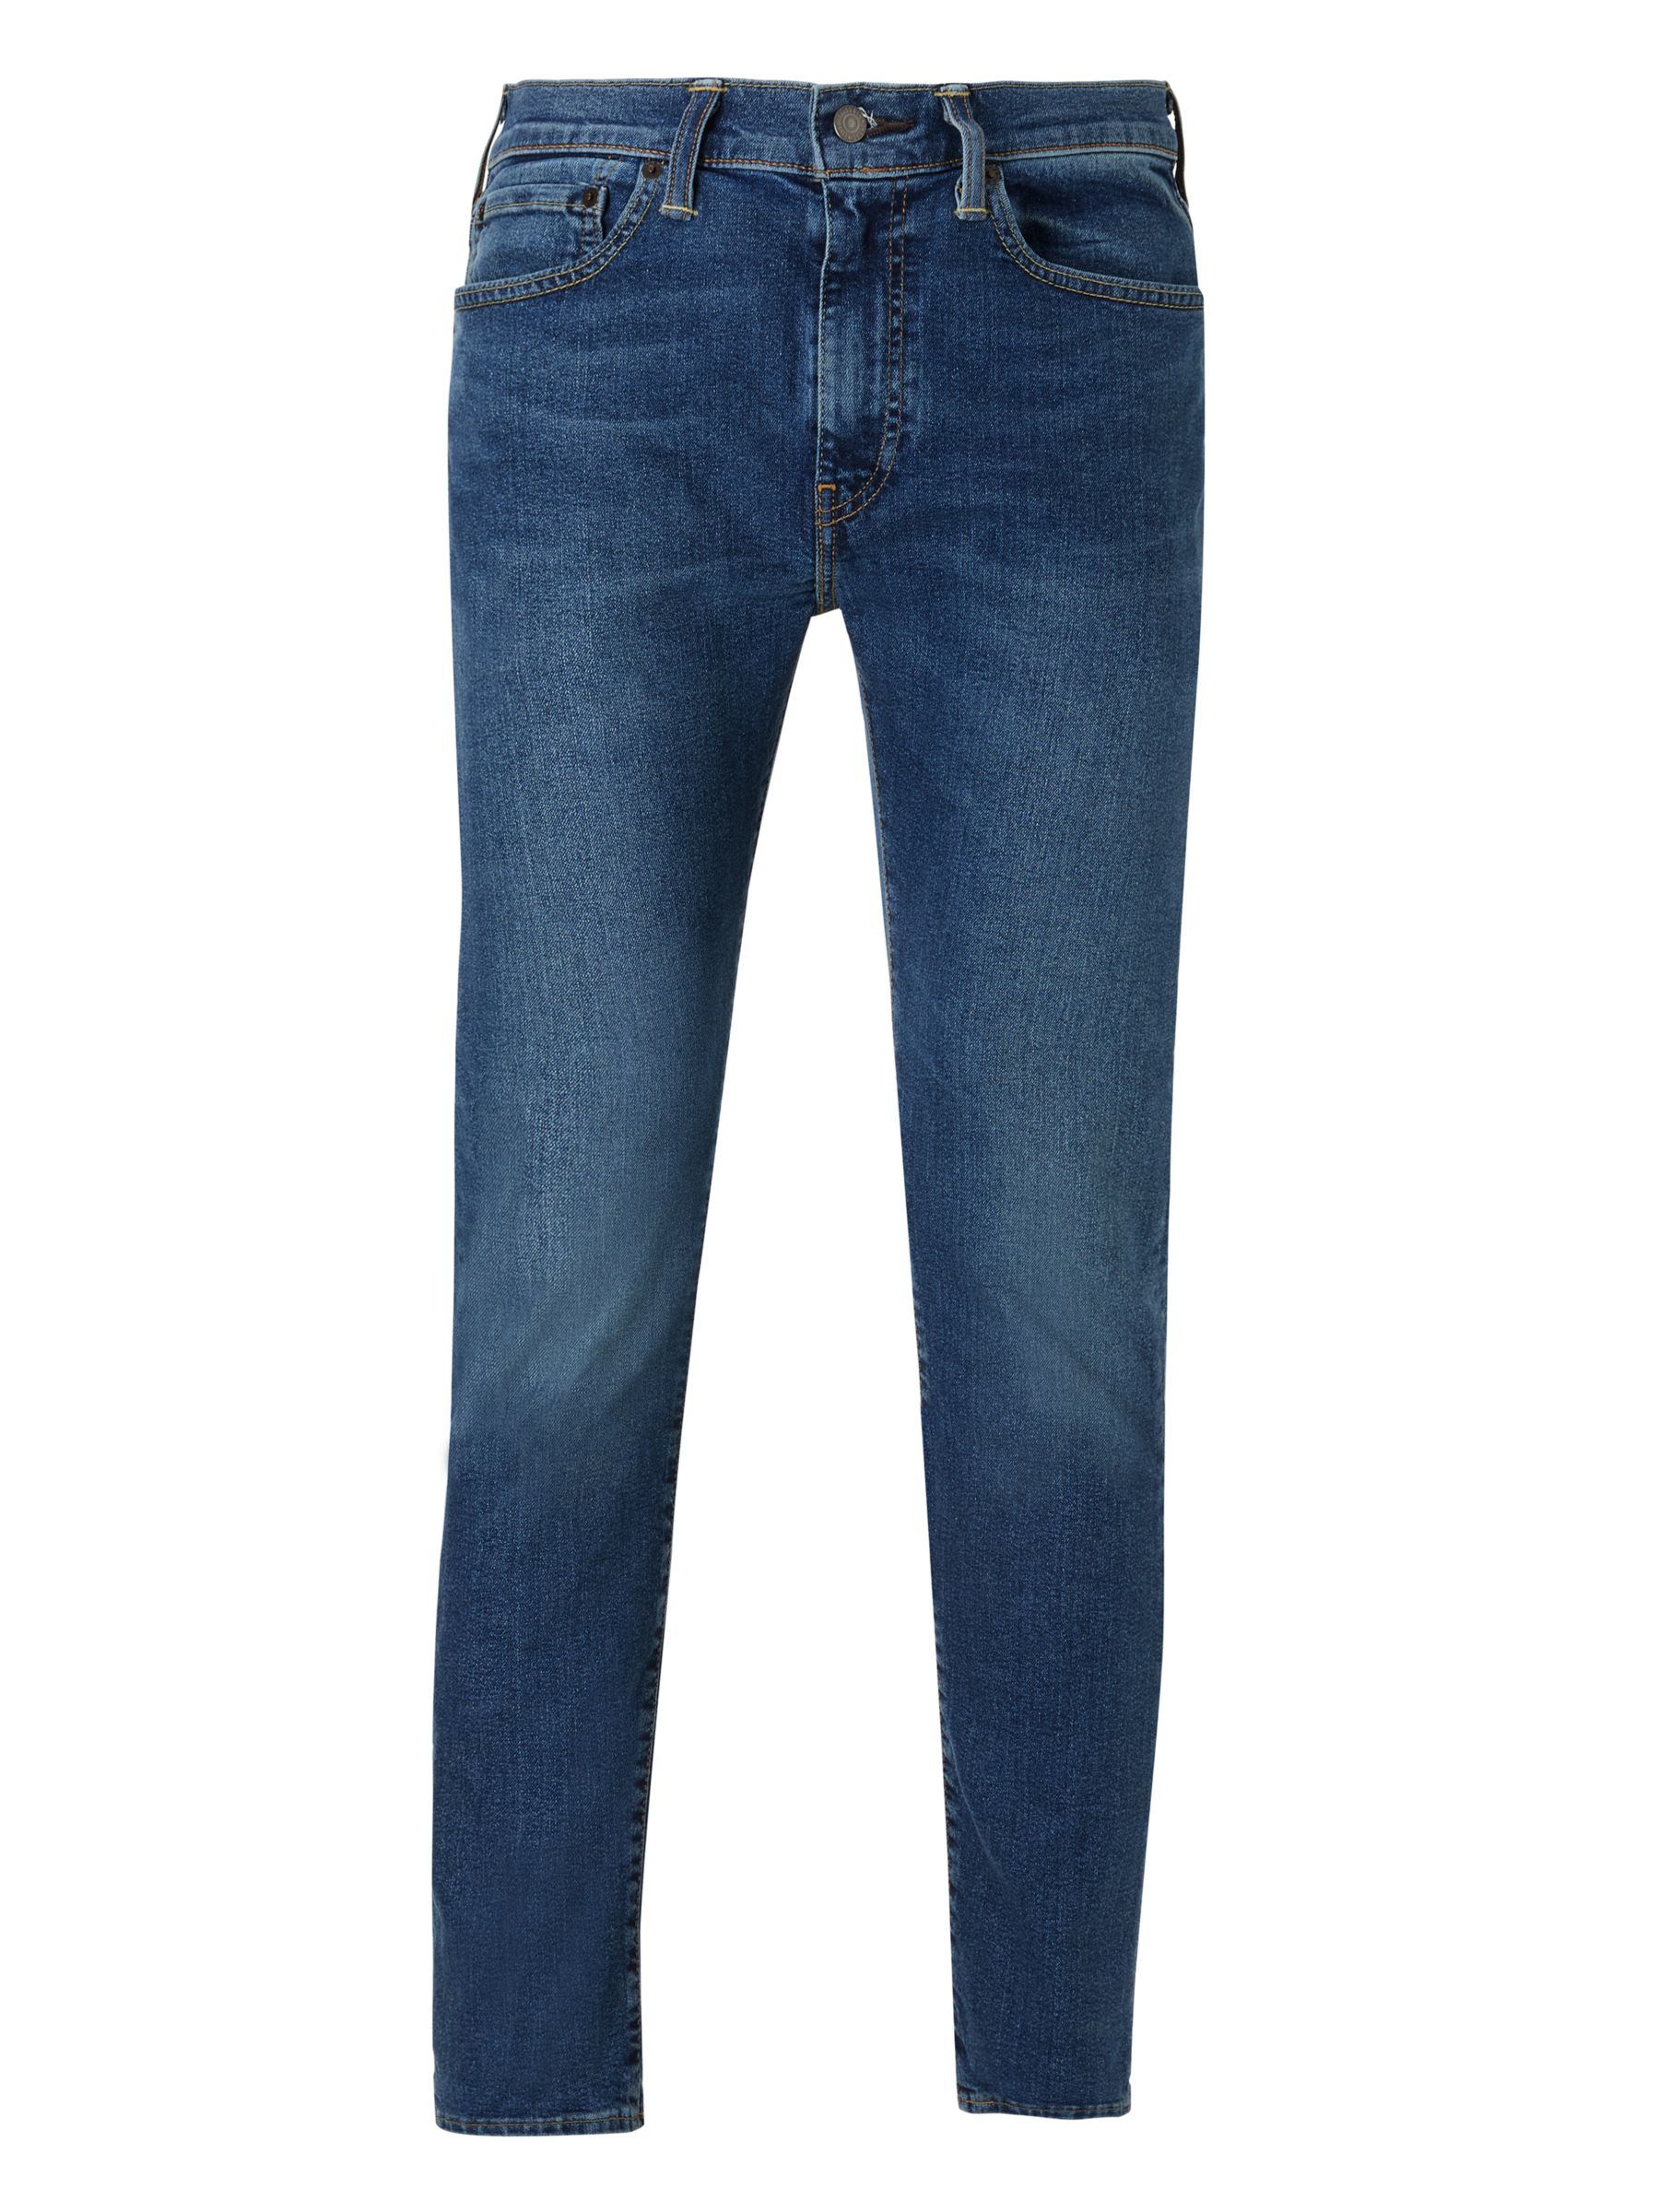 Levi's 510 Skinny Jeans, Huxley at John Lewis & Partners